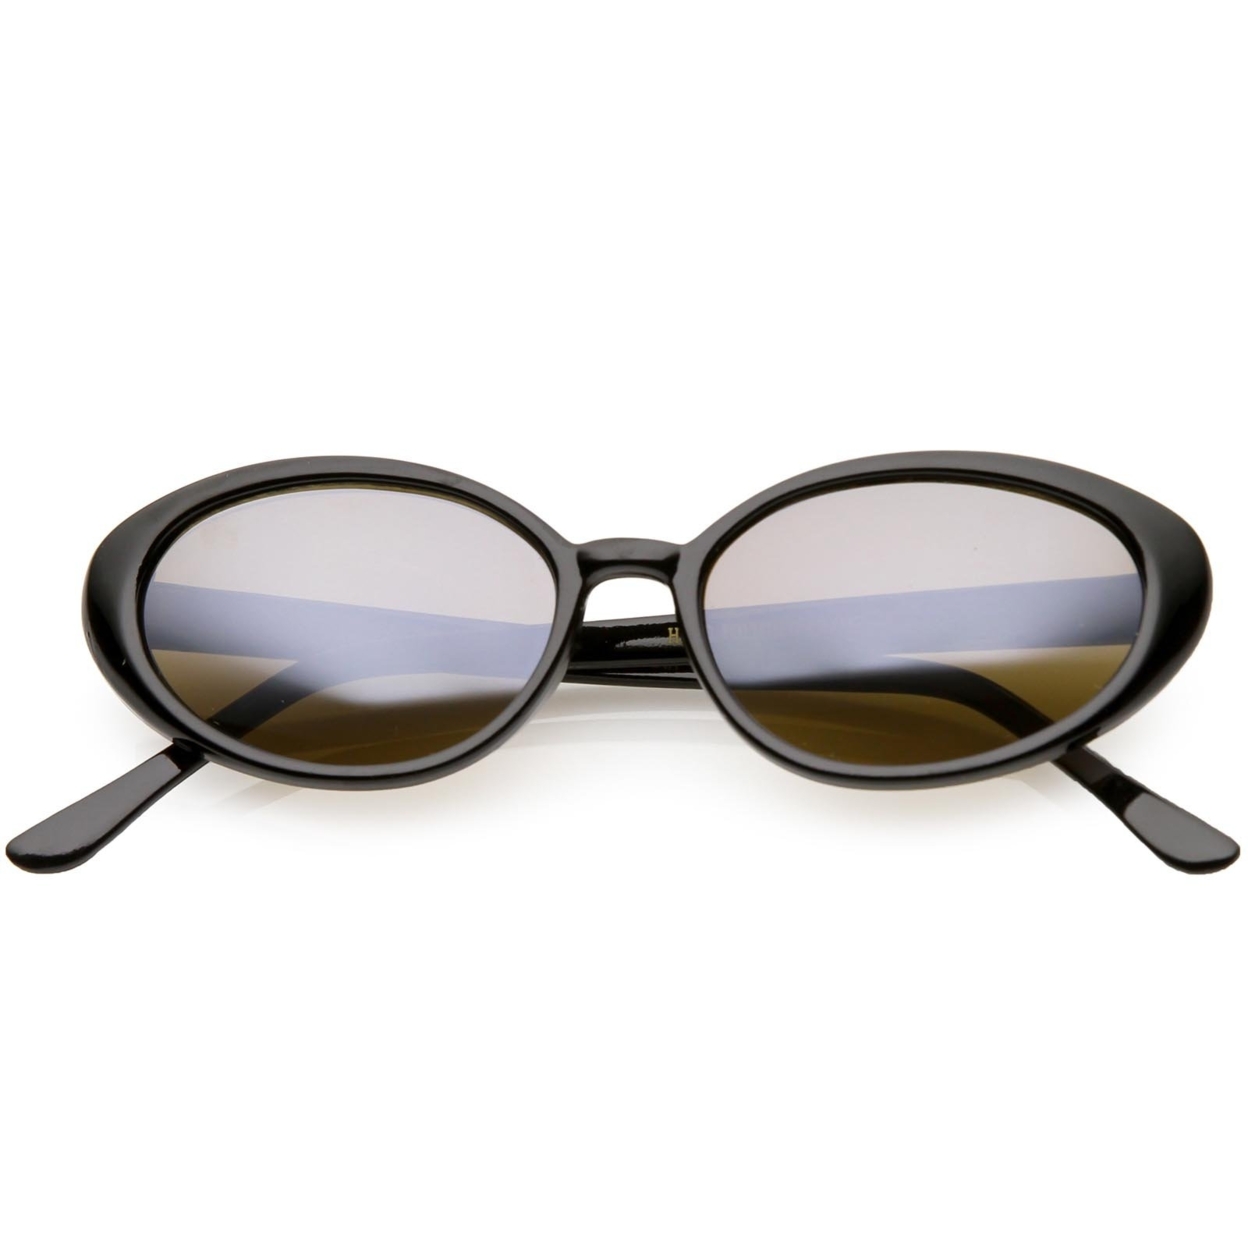 True Vintage Oval Sunglasses Colored Mirror Lens 51mm - Black / Smoke Mirror